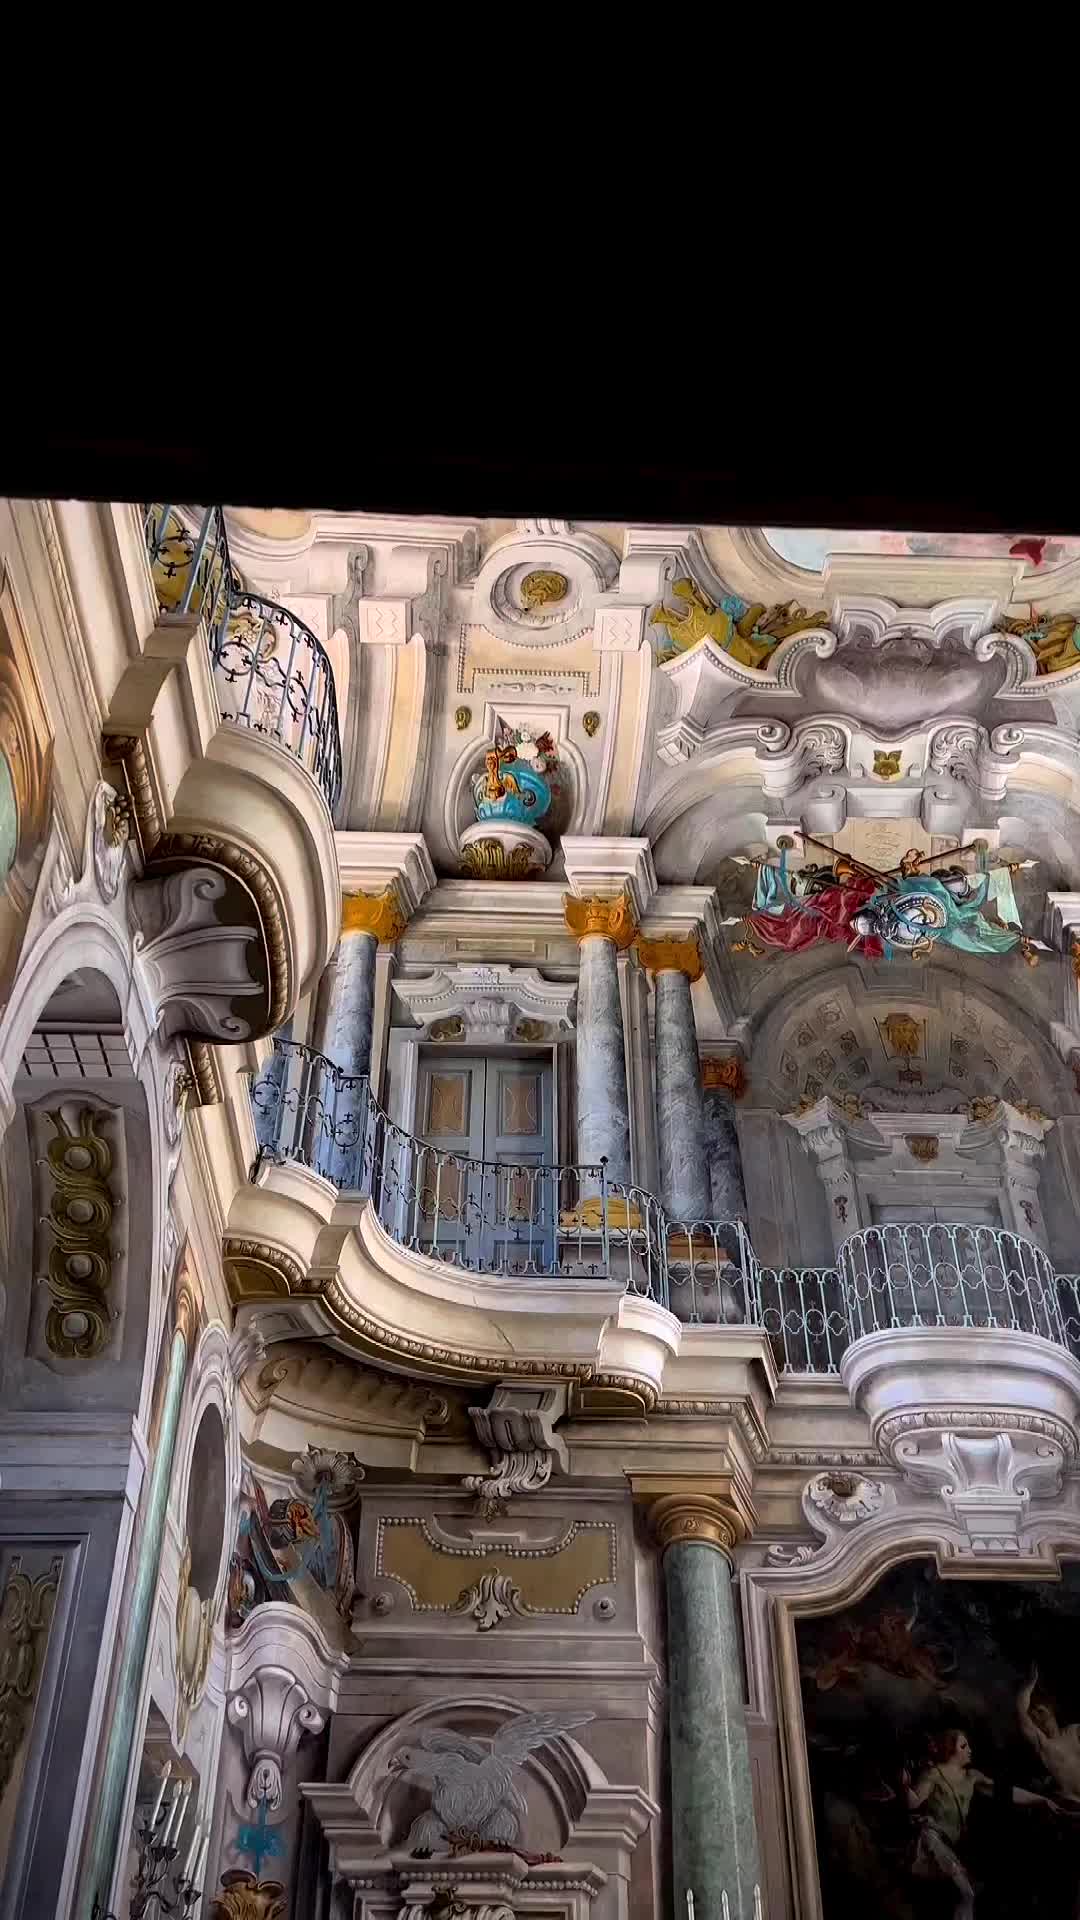 Discover Villa della Regina: Turin's Baroque Gem